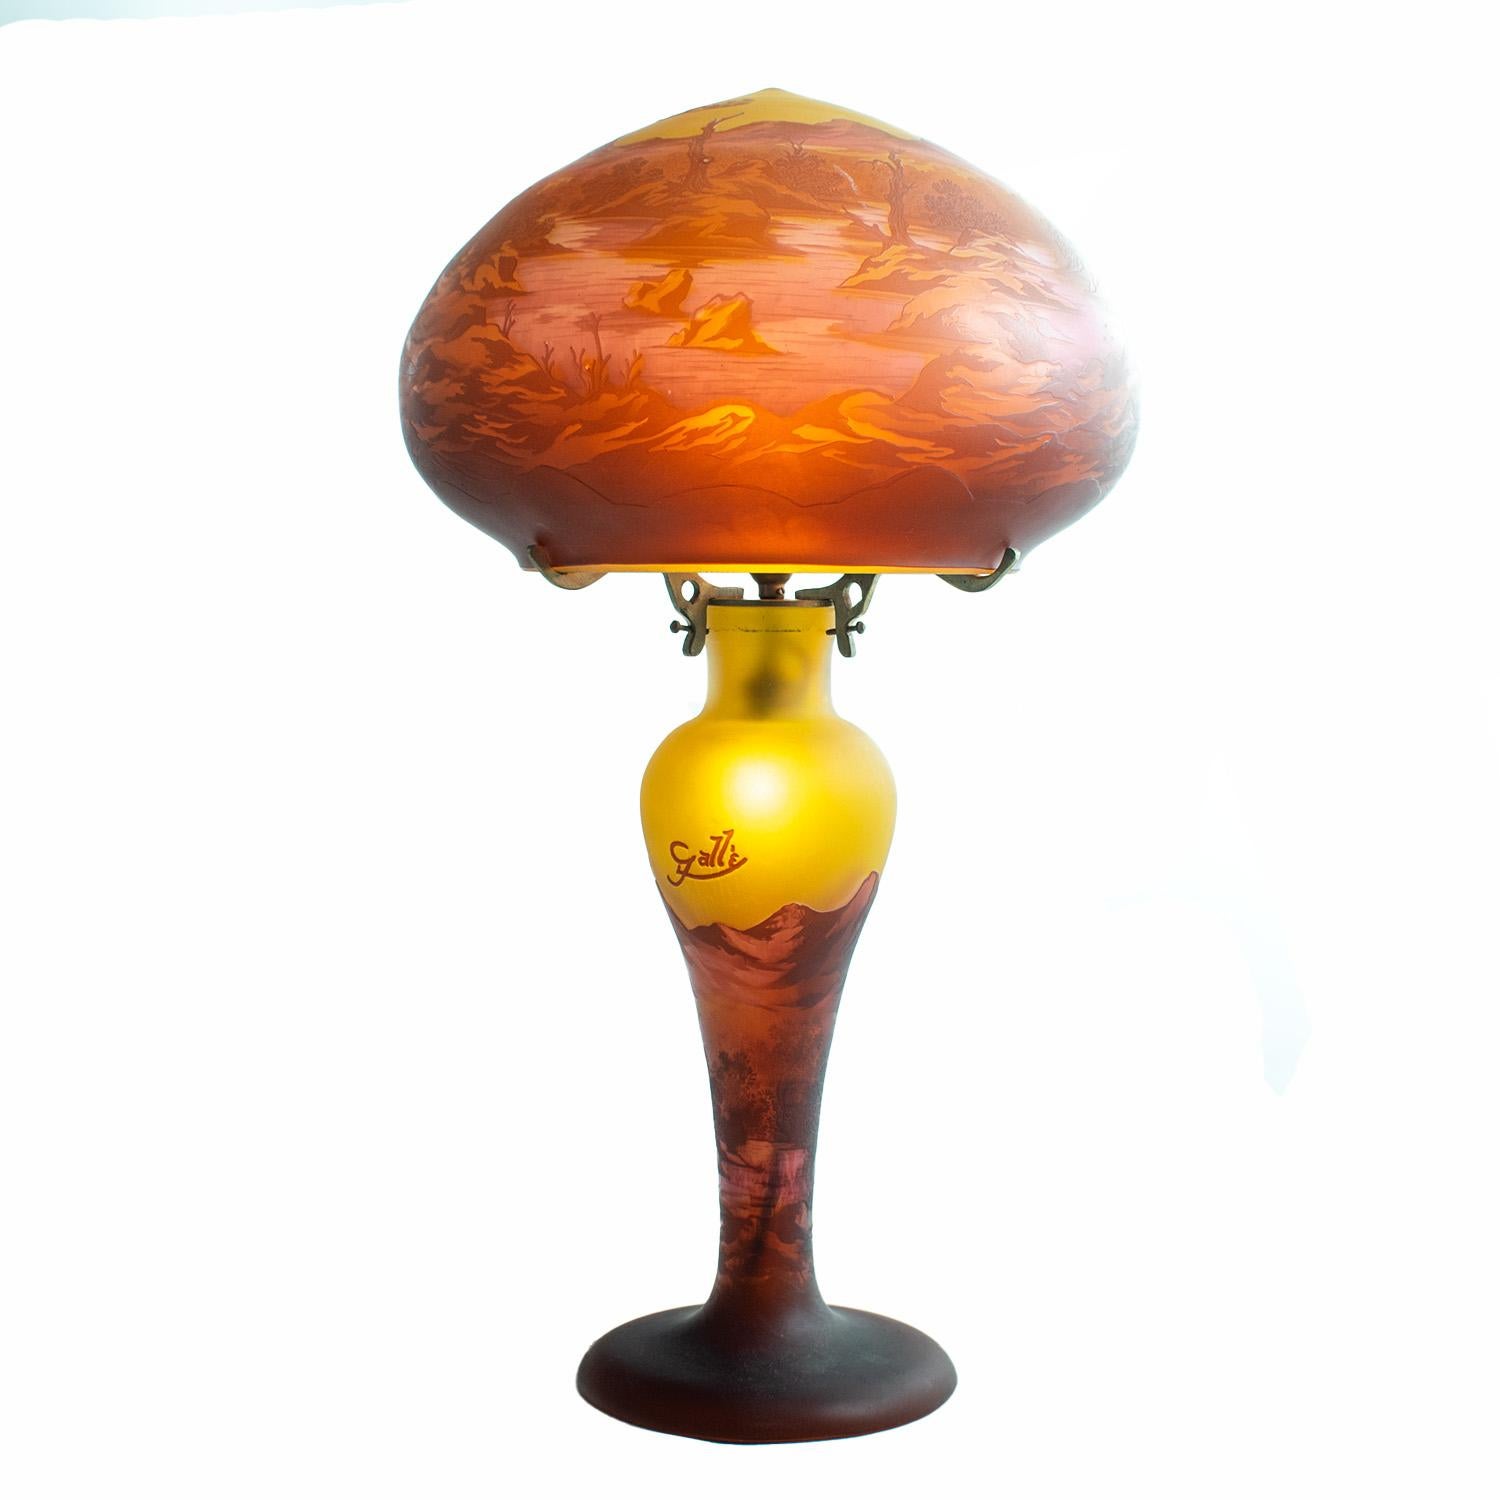 Art Nouveau Gallè Tip - Impressive Large ART NOUVEAU MUSHROOM LAMP in multilayer glass For Sale